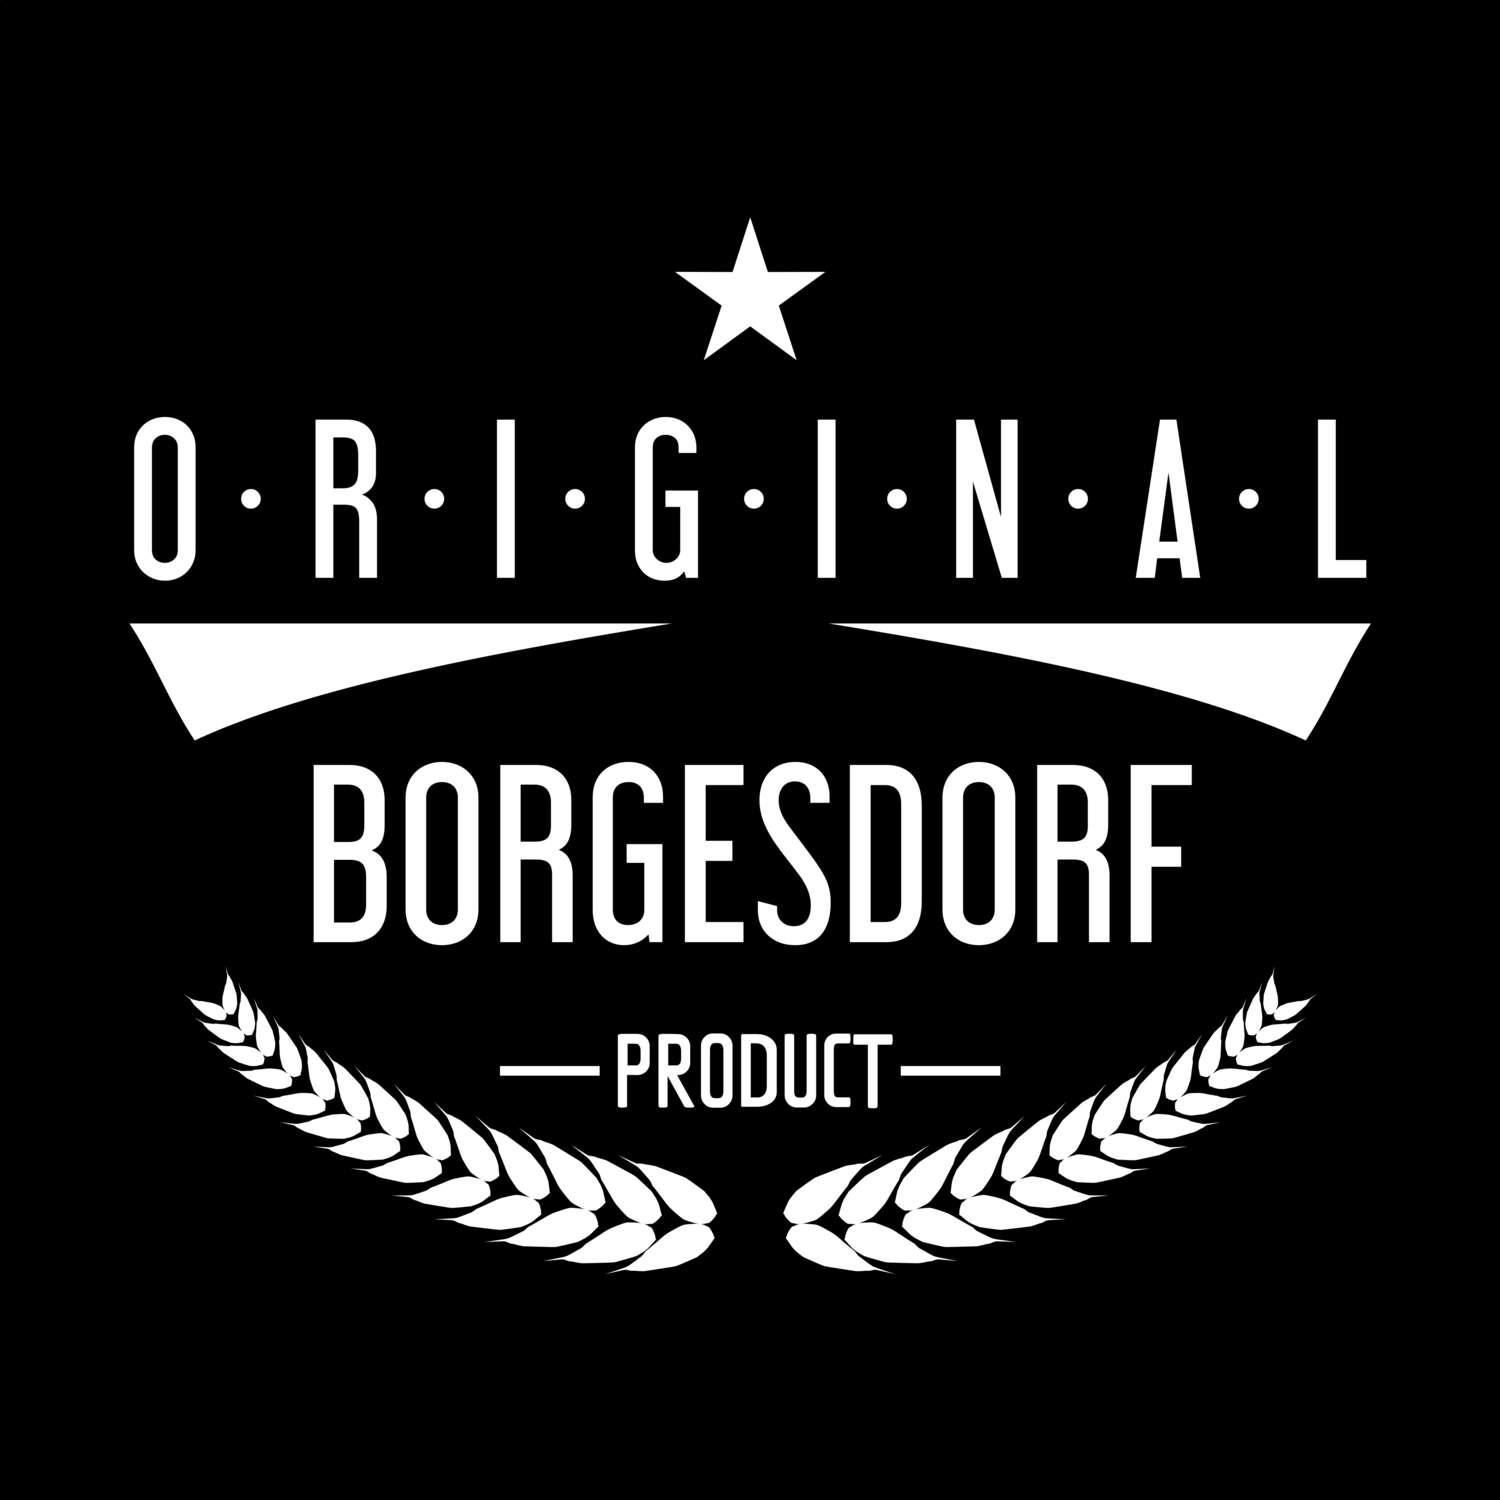 Borgesdorf T-Shirt »Original Product«